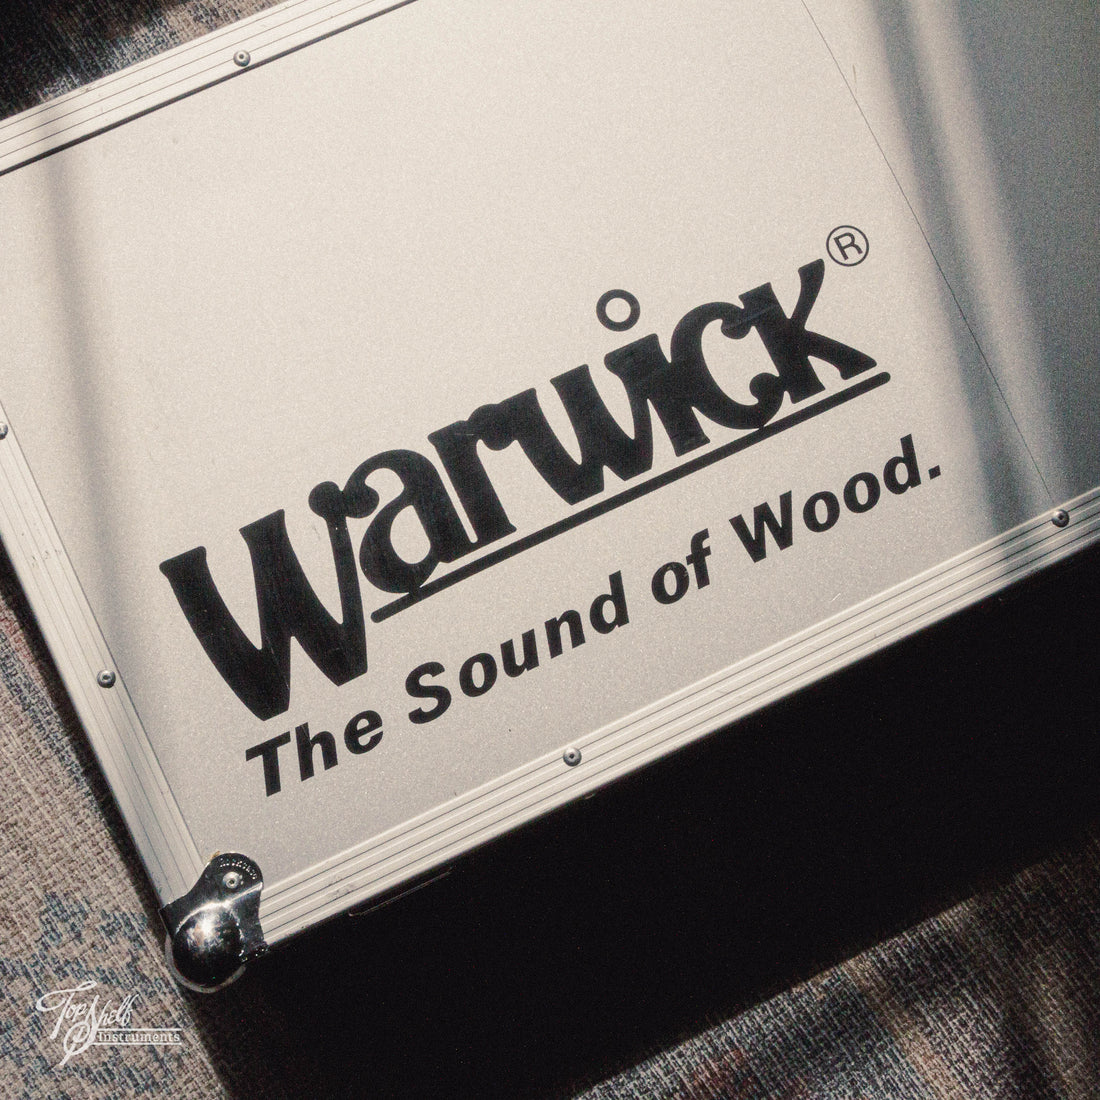 Warwick Fortress Limited Edition Nirvana Black 2014